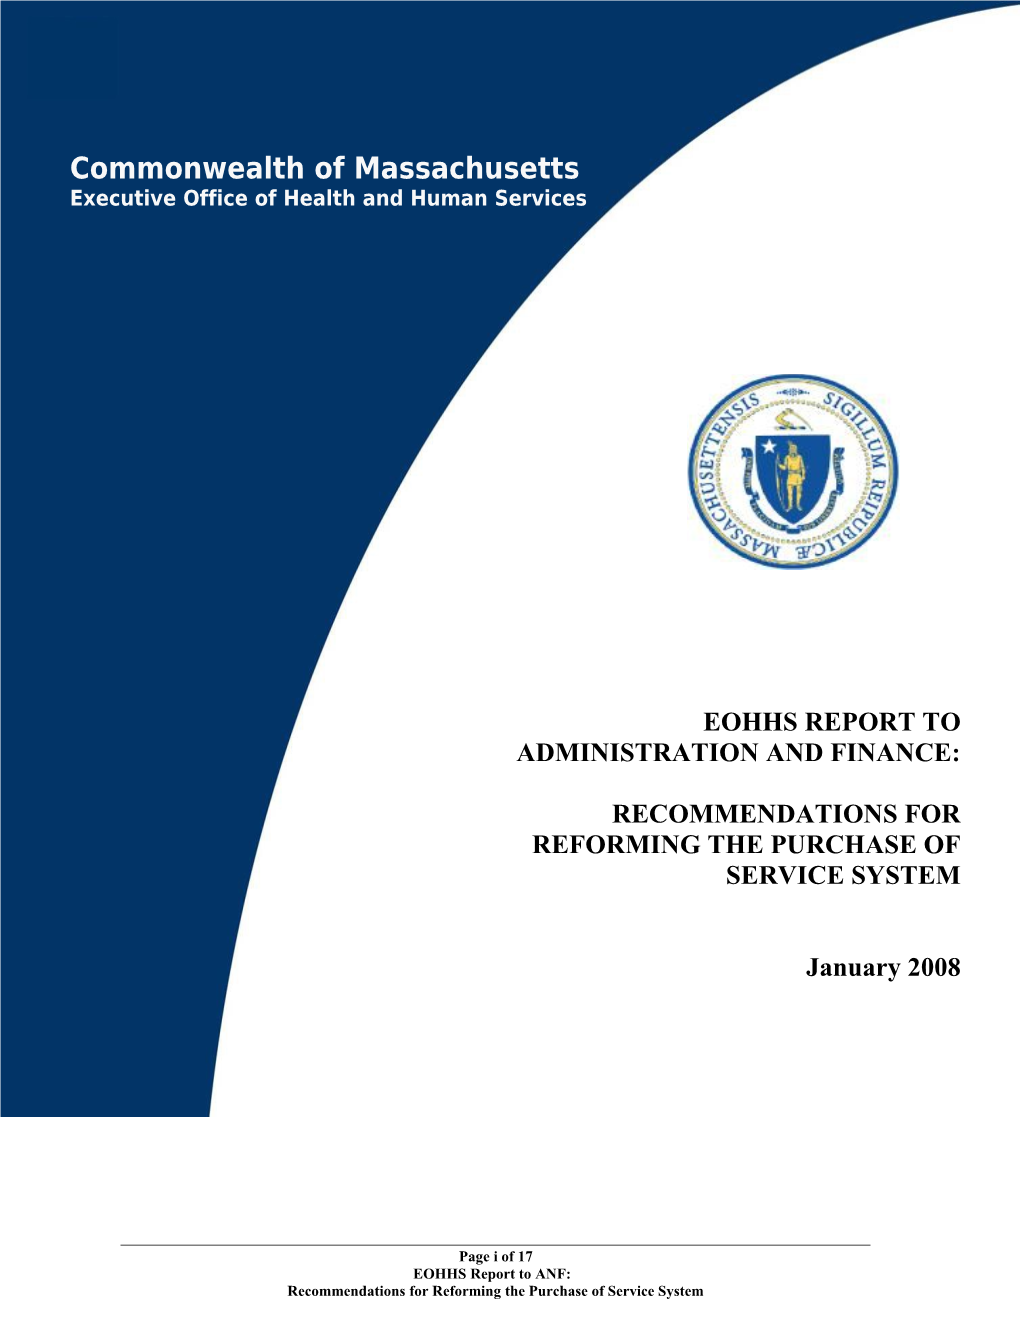 The Commonwealth of Massachusetts Human Service Industry